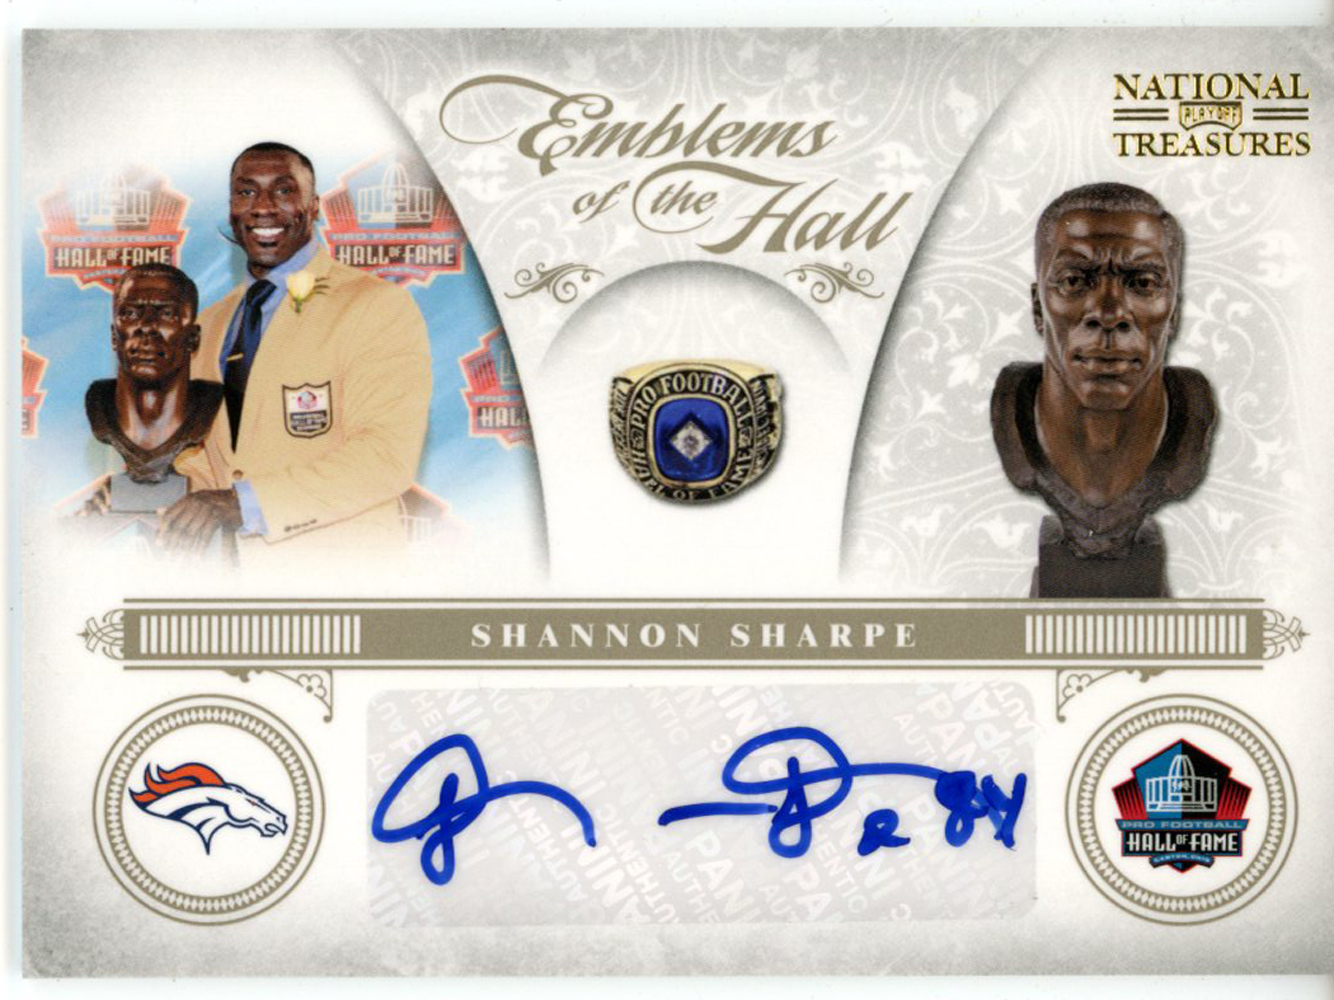 Shannon Sharpe Signed 2011 National Treasures Emblems 42/99 Card